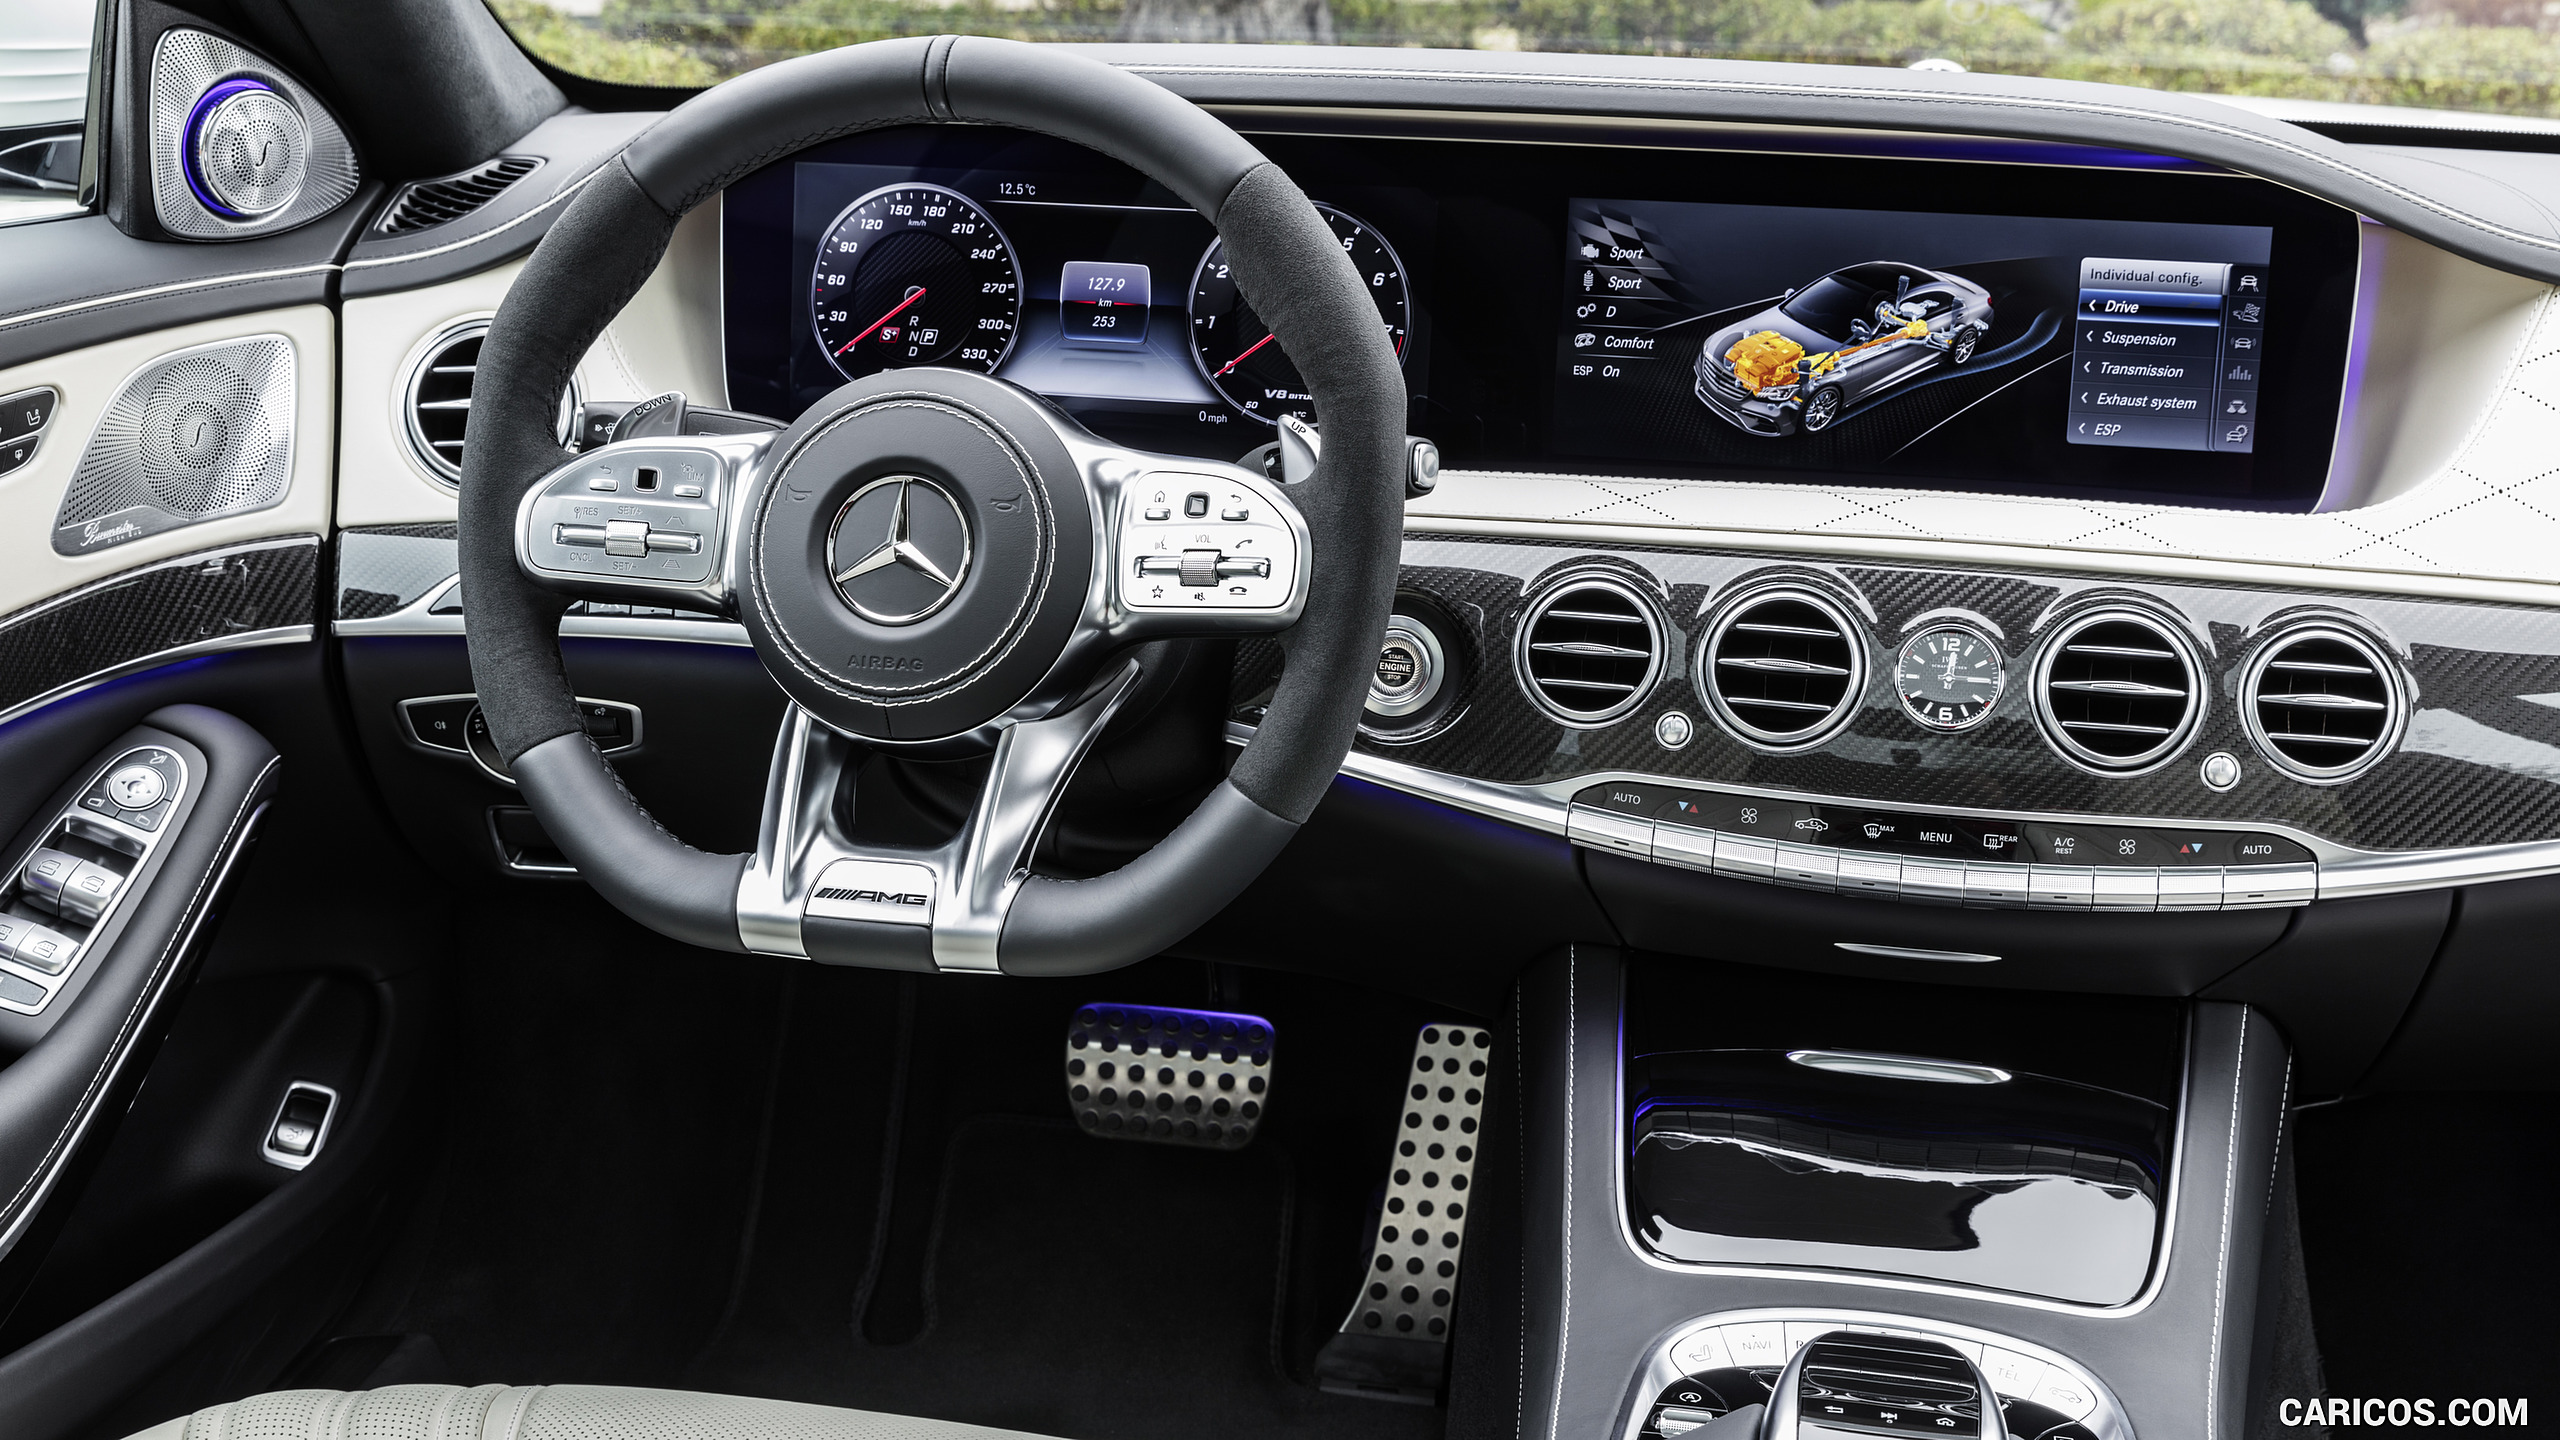 2018 Mercedes-AMG S63 4MATIC+ - Interior, #26 of 100